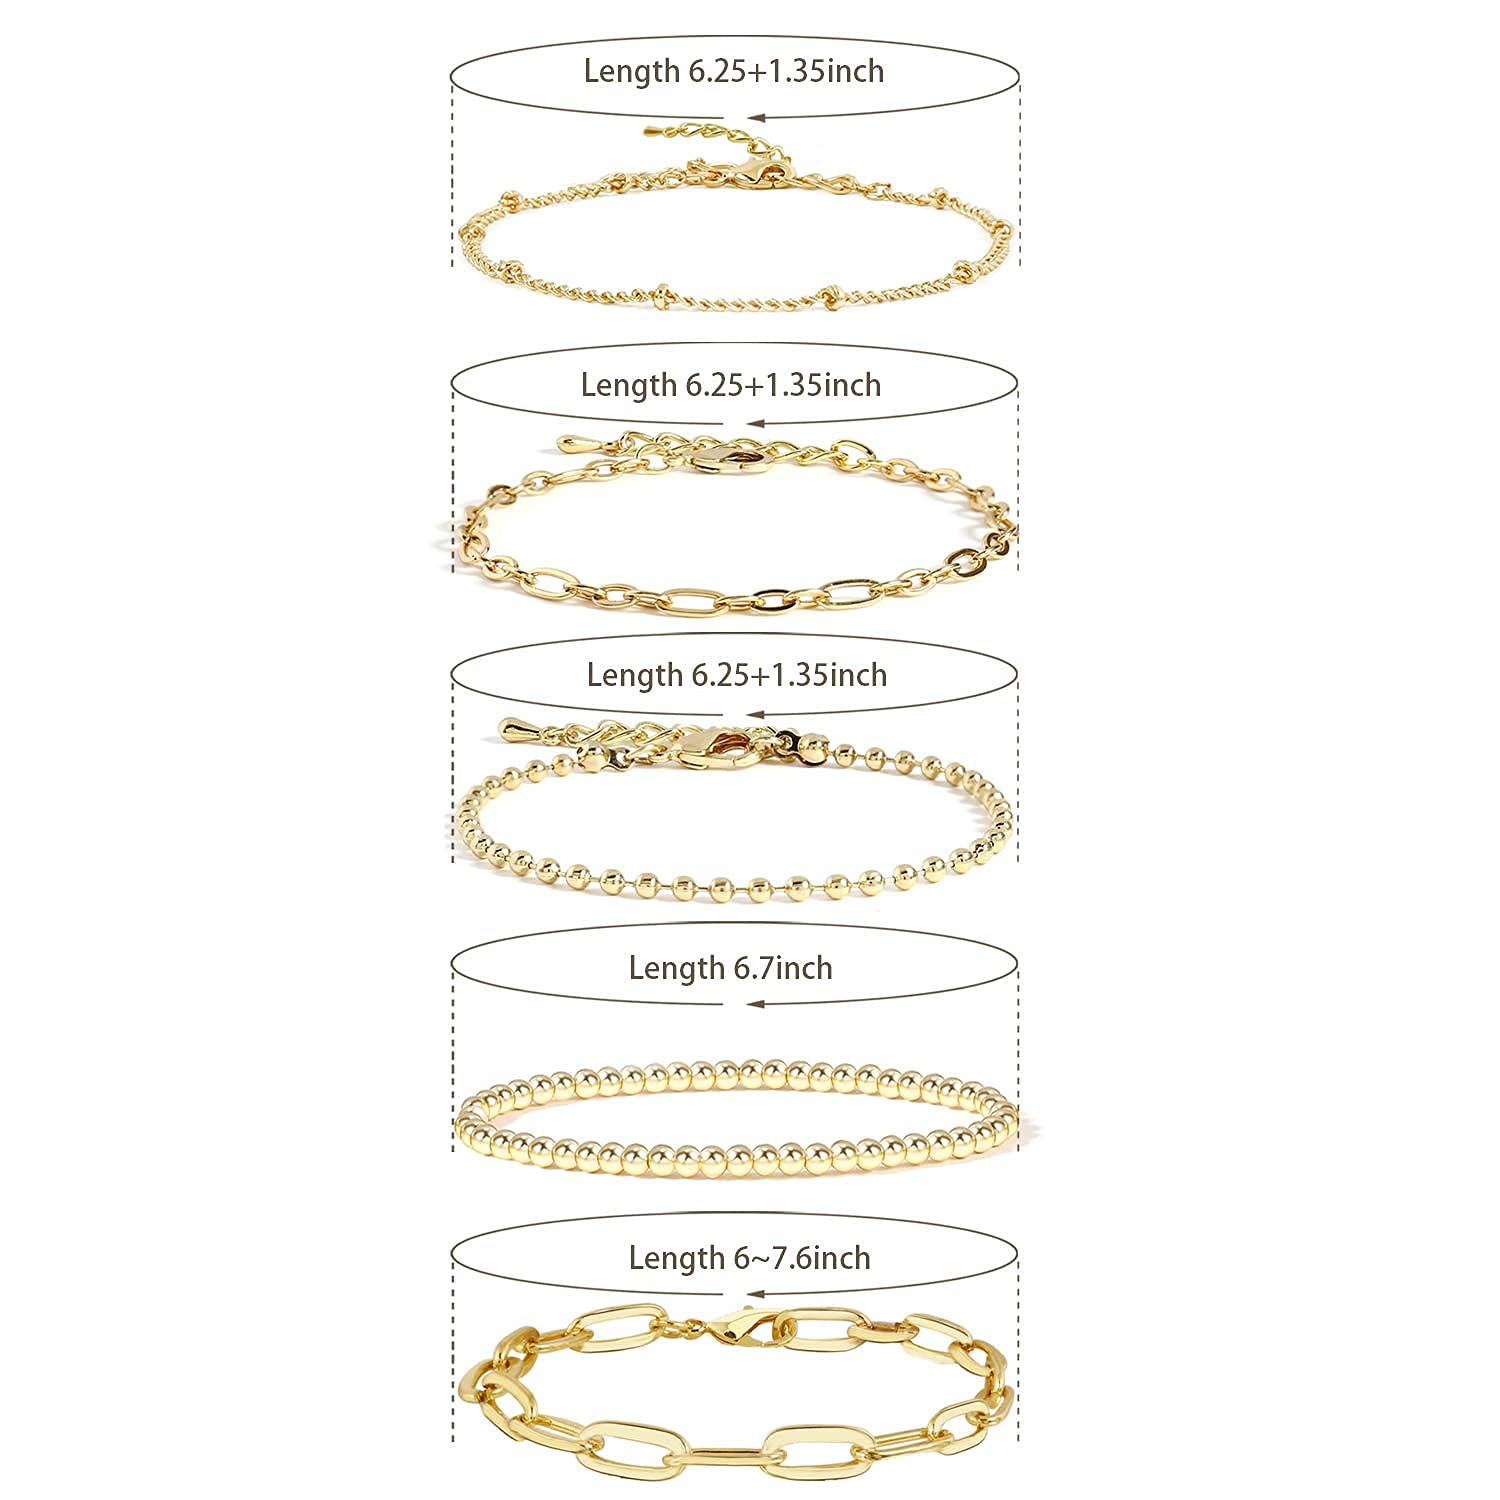 CONRAN KREMIX Gold Chain Bracelet Sets for Women Girls 14K Gold Plated Dainty Link Paperclip Bracelets Stake Adjustable Layered Metal Link Bracelet Set Fashion Jewelry